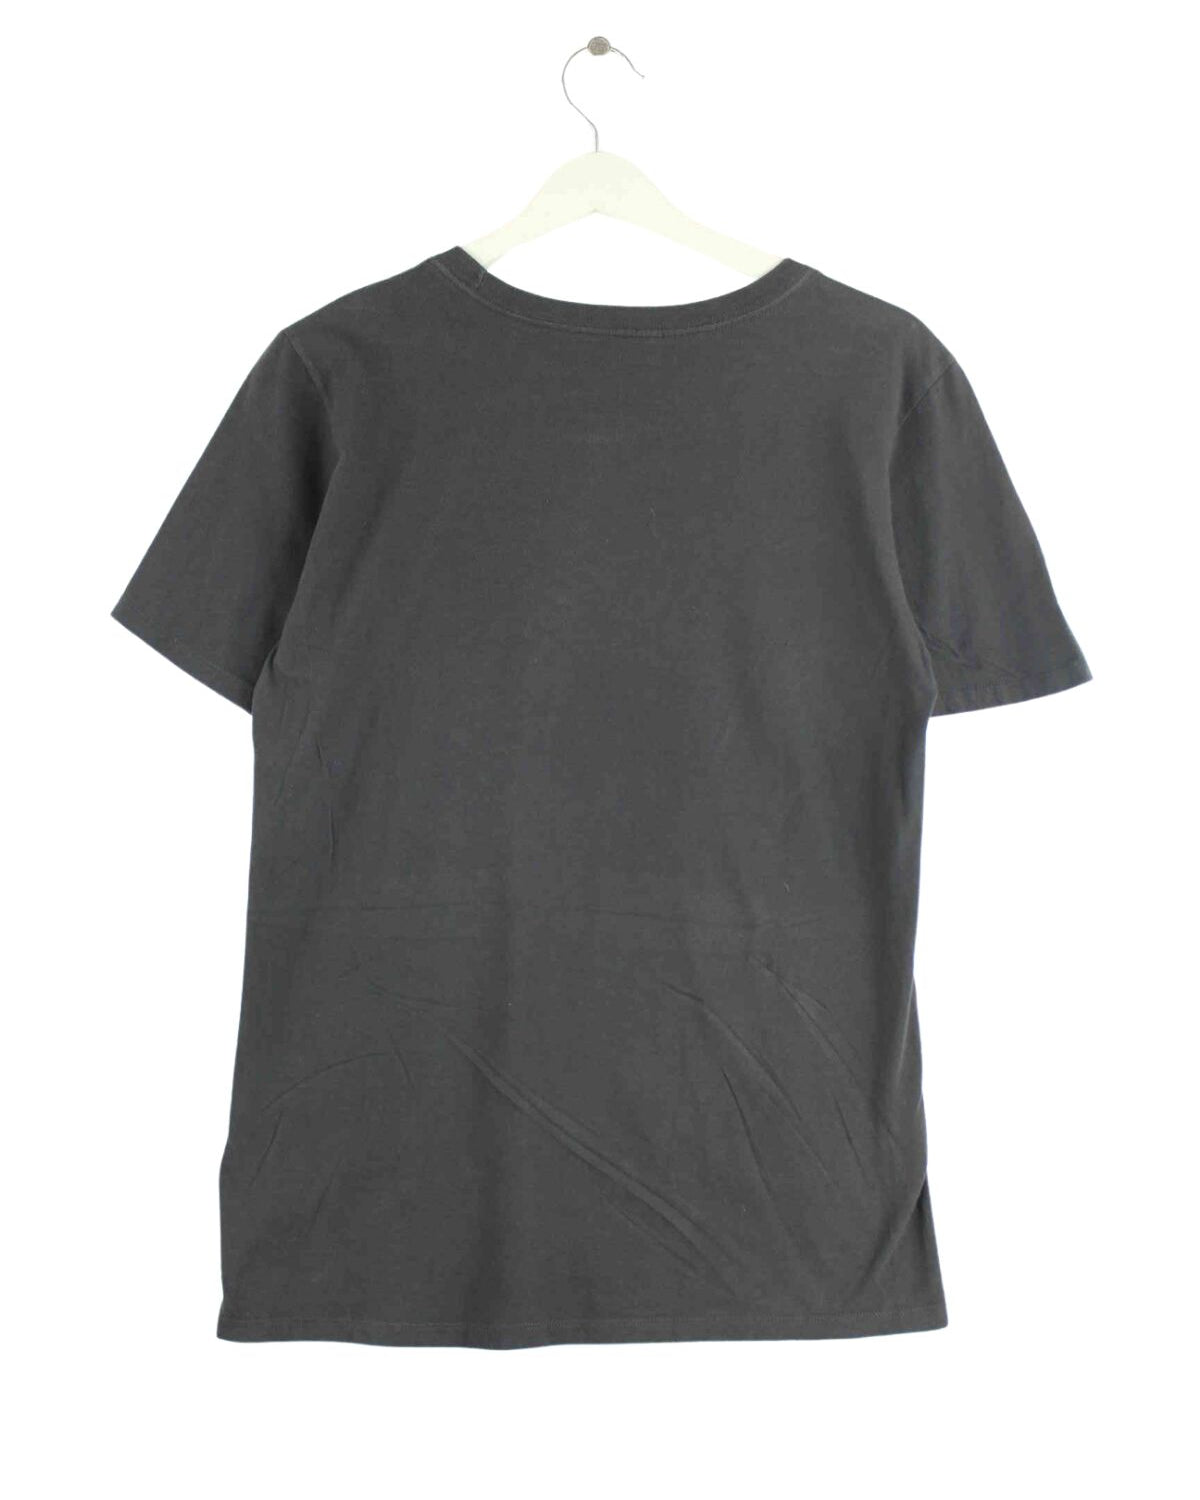 Nike Cut The Net Print T-Shirt Grau S (back image)